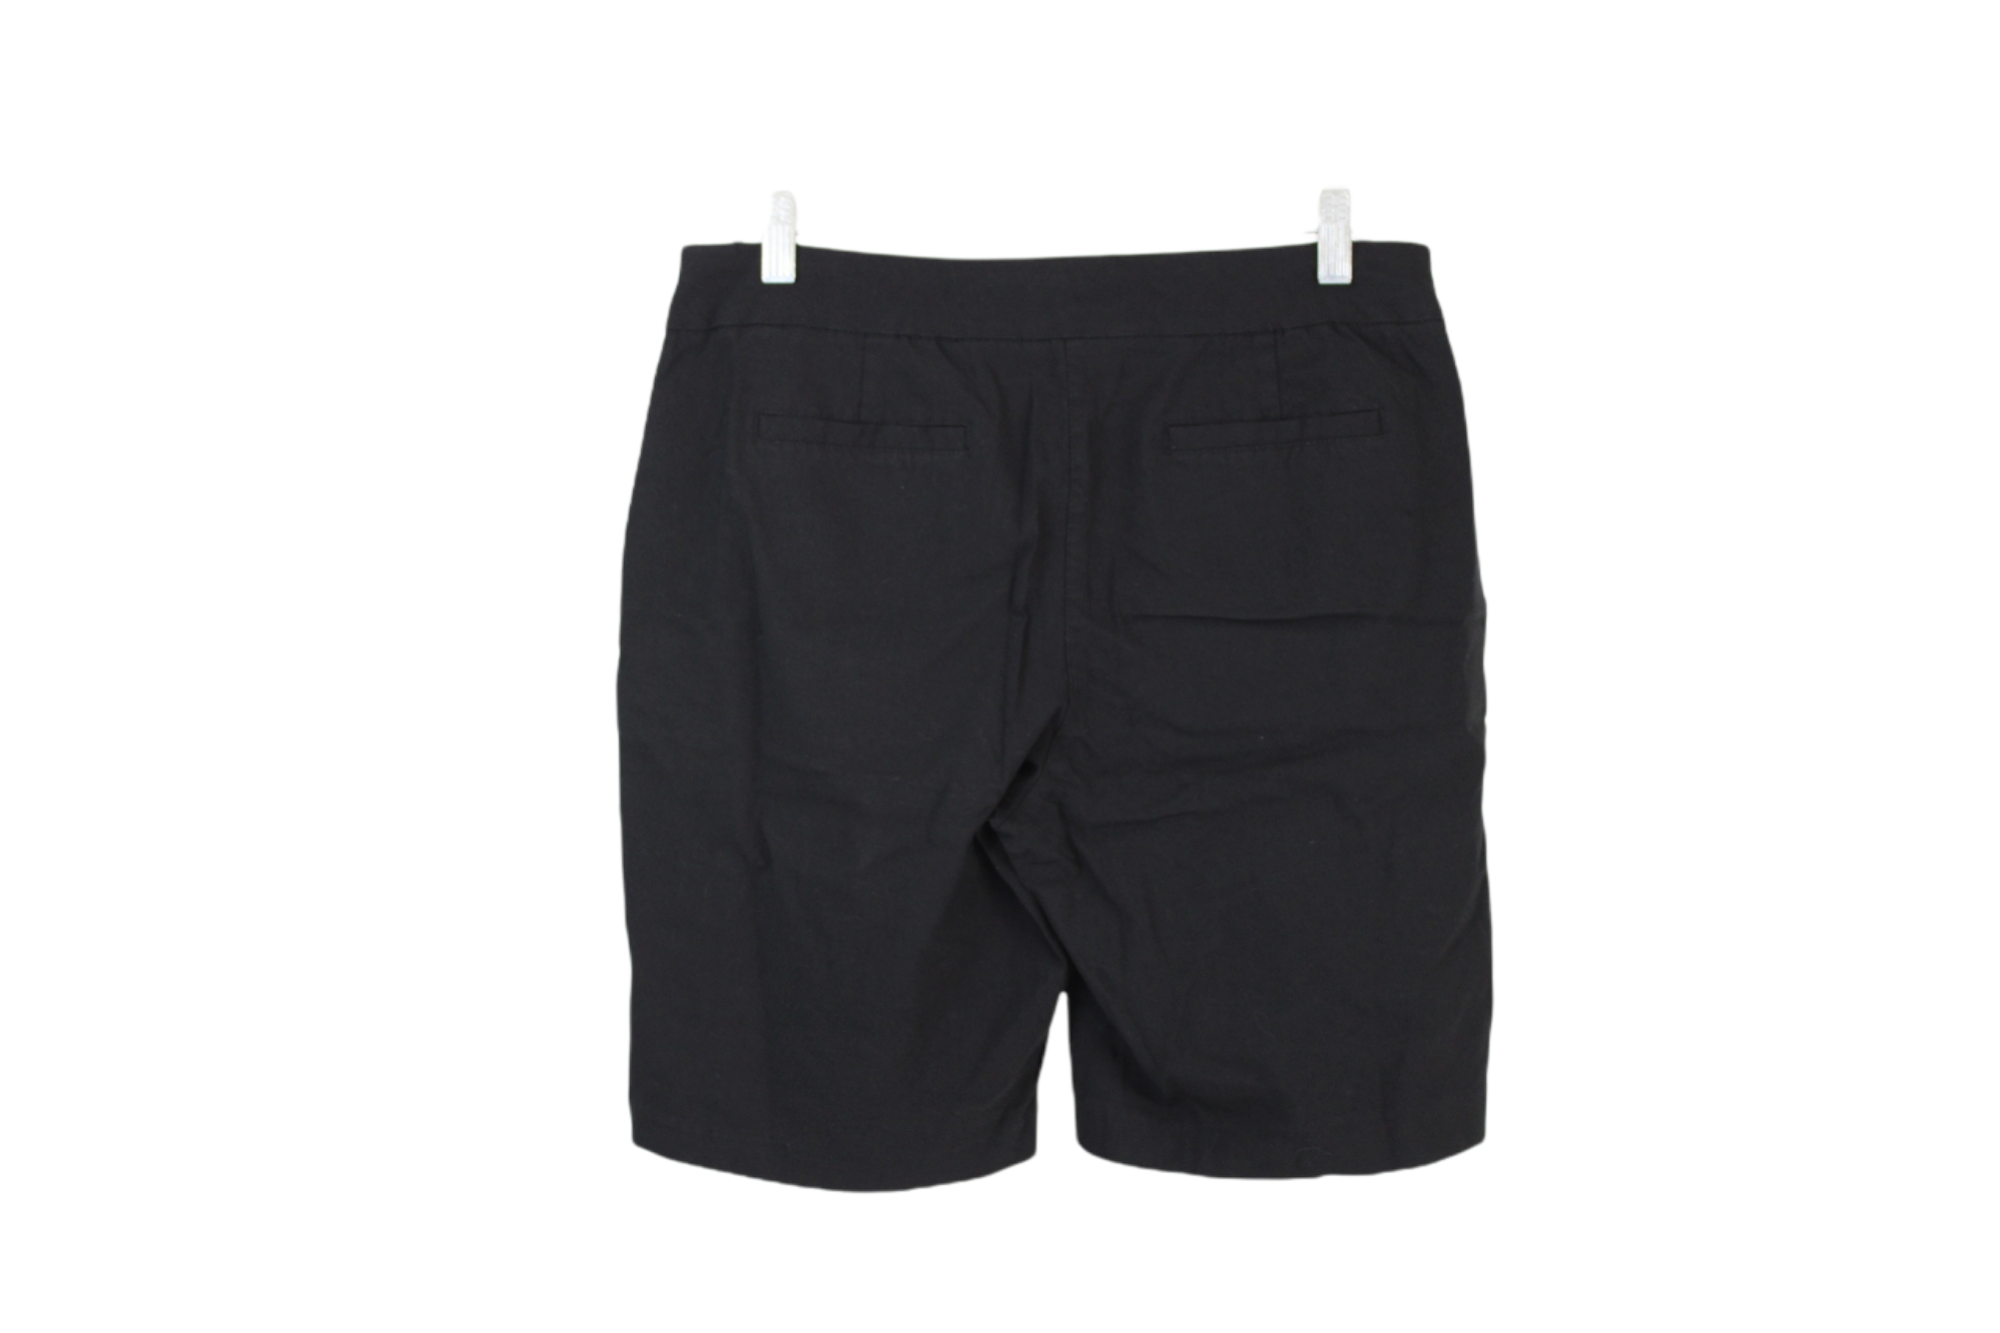 Briggs Black Stretch Shorts | 12 Petite